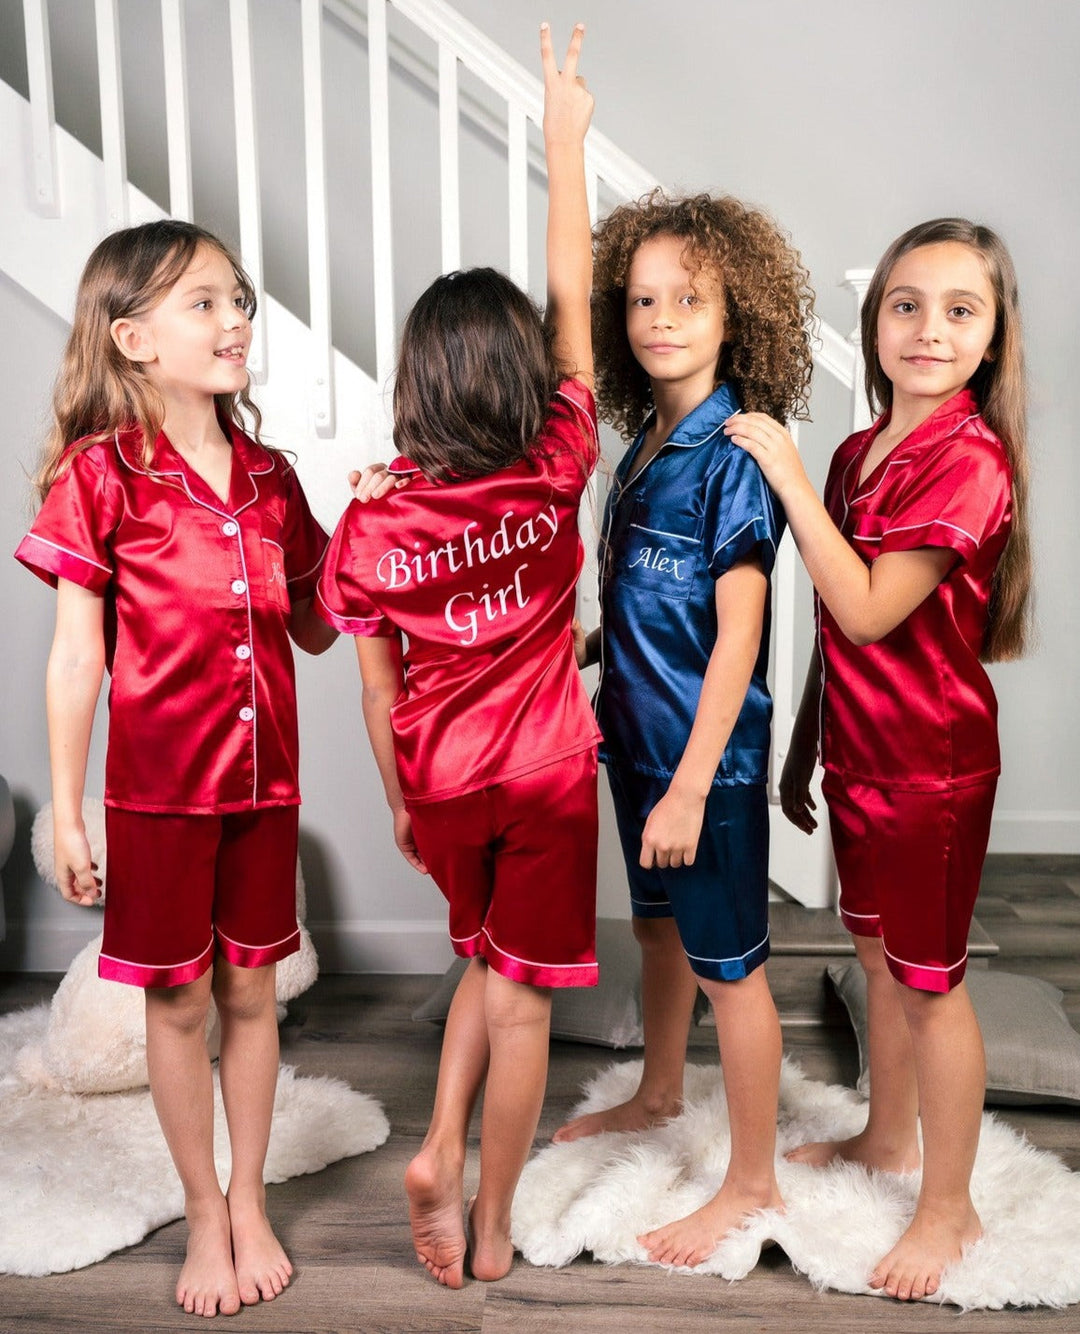 Kids Boys Girls Custom Satin Pajamas Set Add Your Logo Design